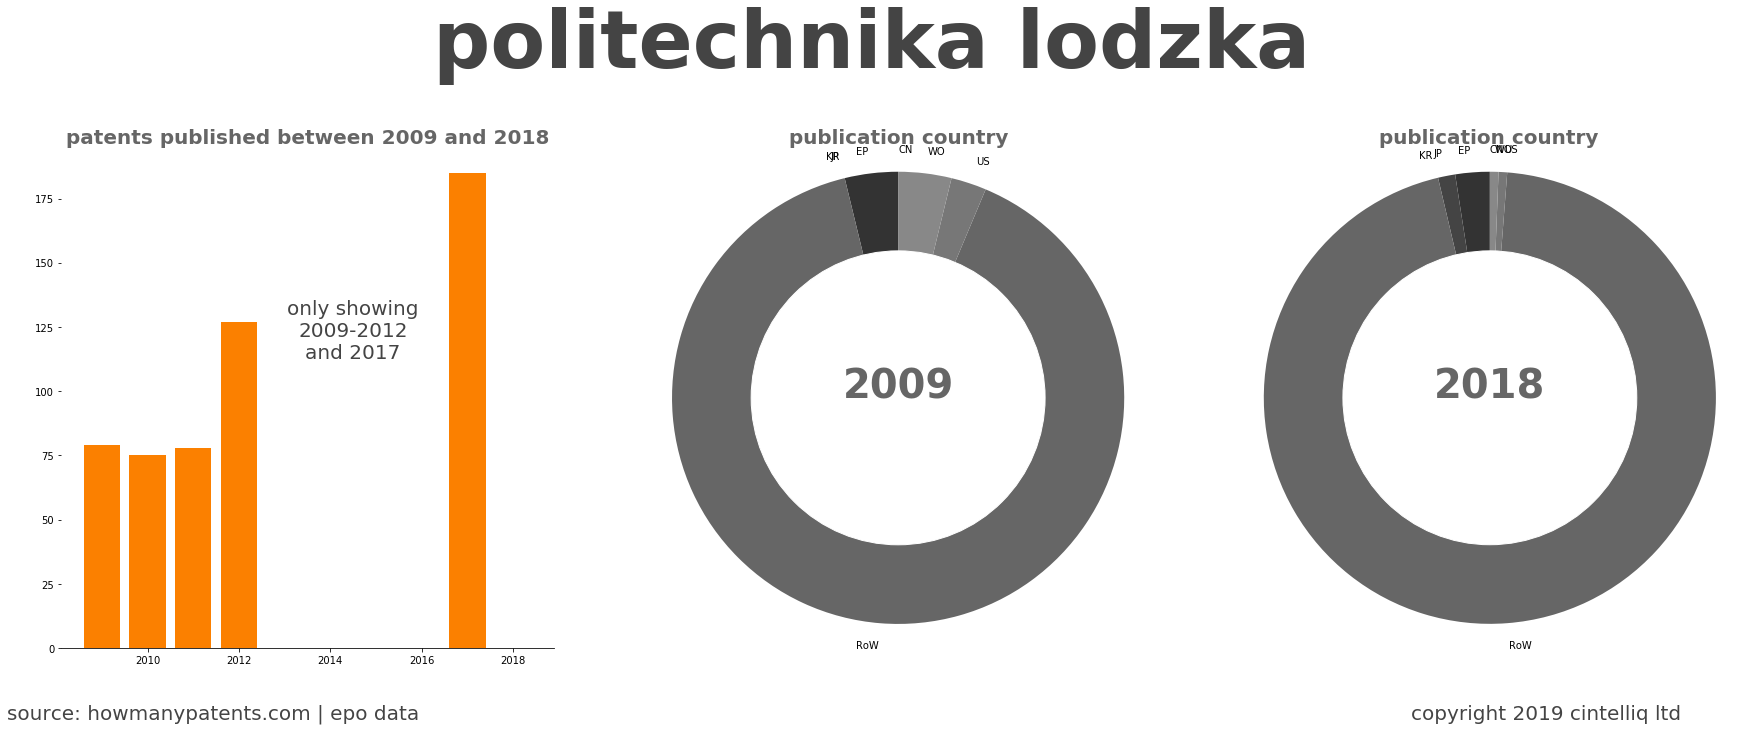 summary of patents for Politechnika Lodzka